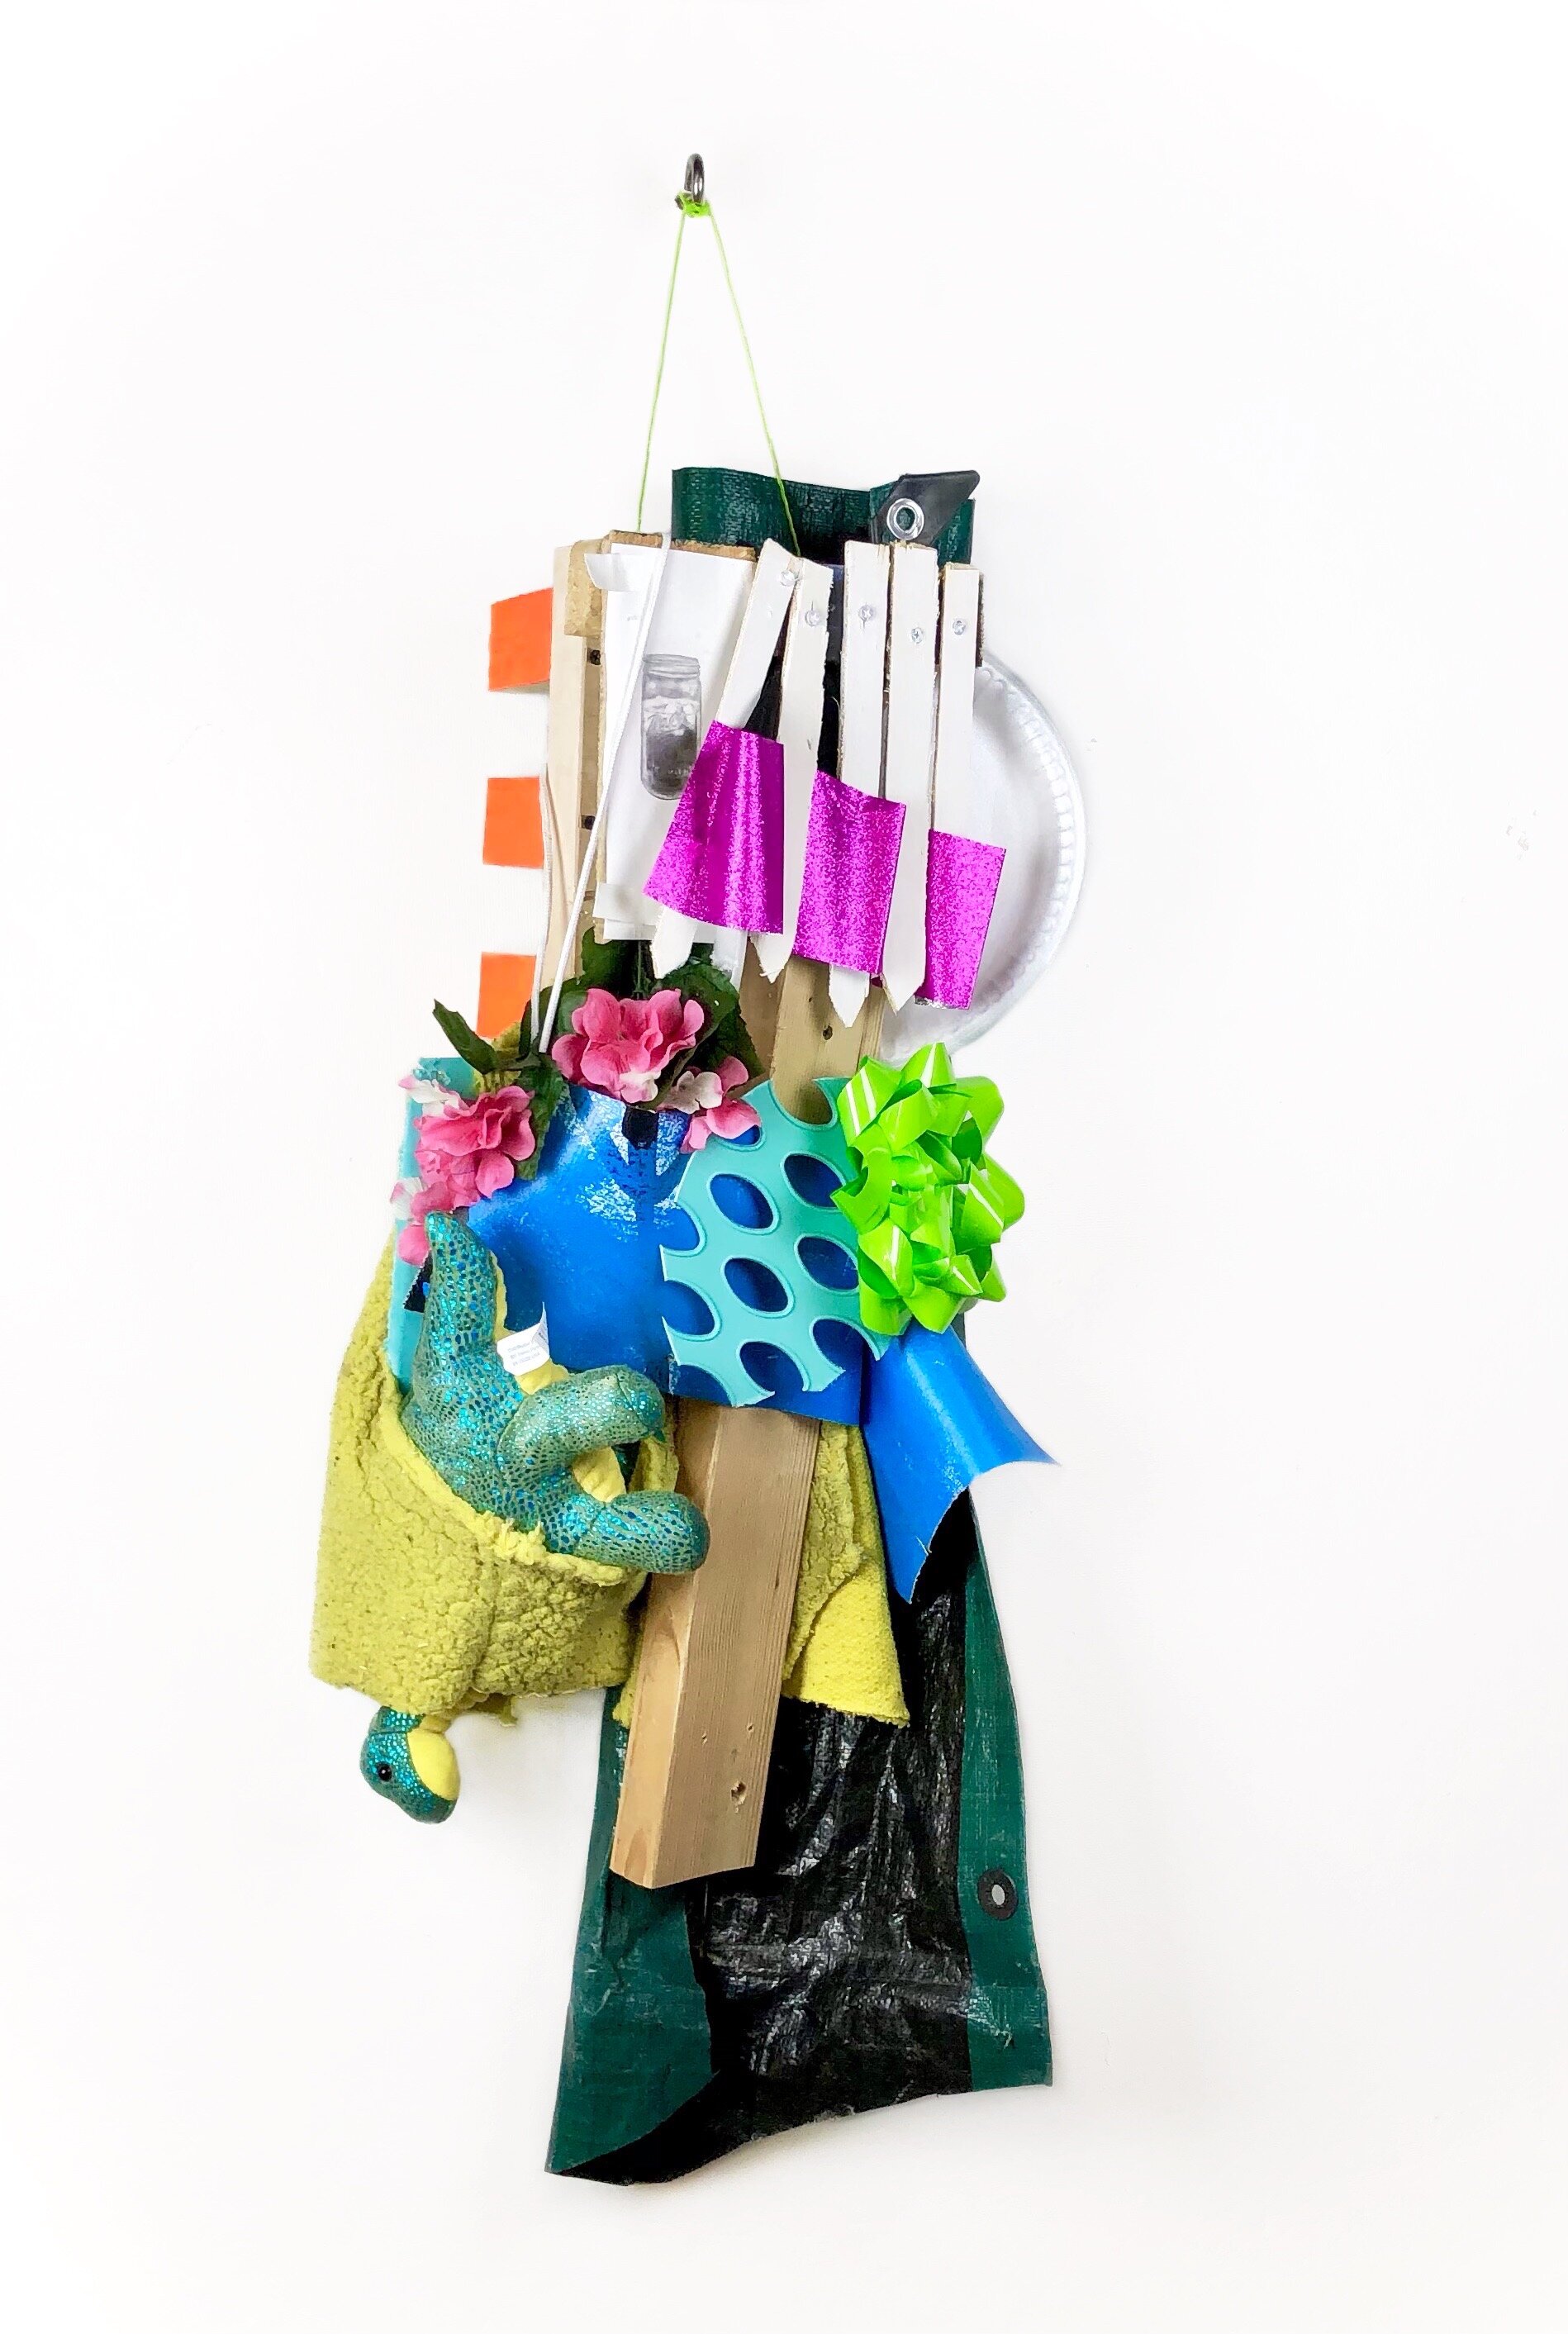   No Fun 4   Plastic laundry basket, stuffed dinosaur, tarp, wood, mixed media, 36” X 21”, 2020, $600 